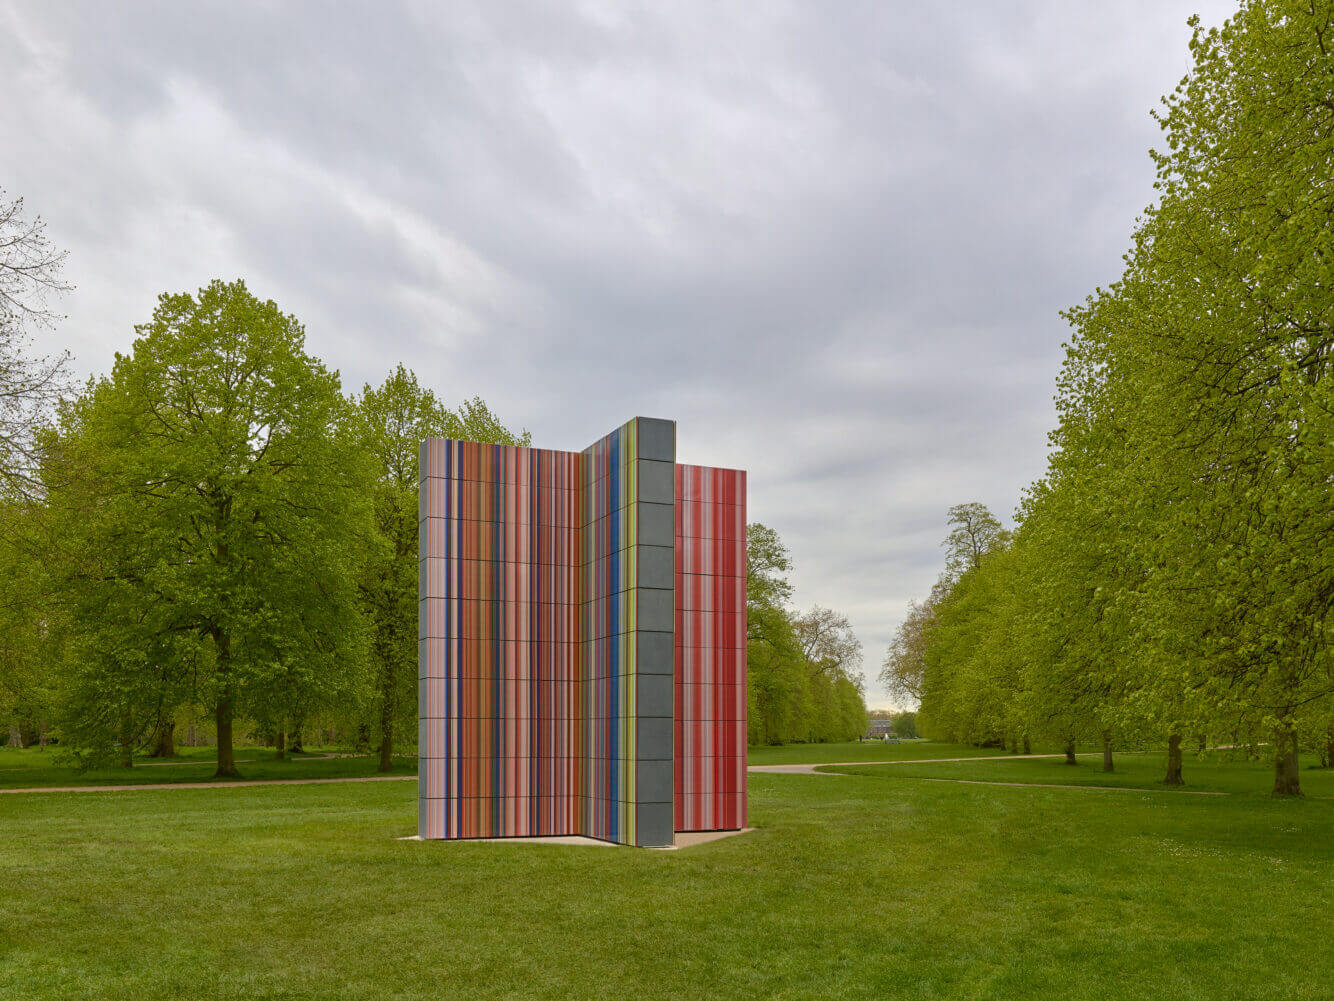 STRIP-TOWER اثر گرهارد ریشتر در لندن به نمایش درآمد